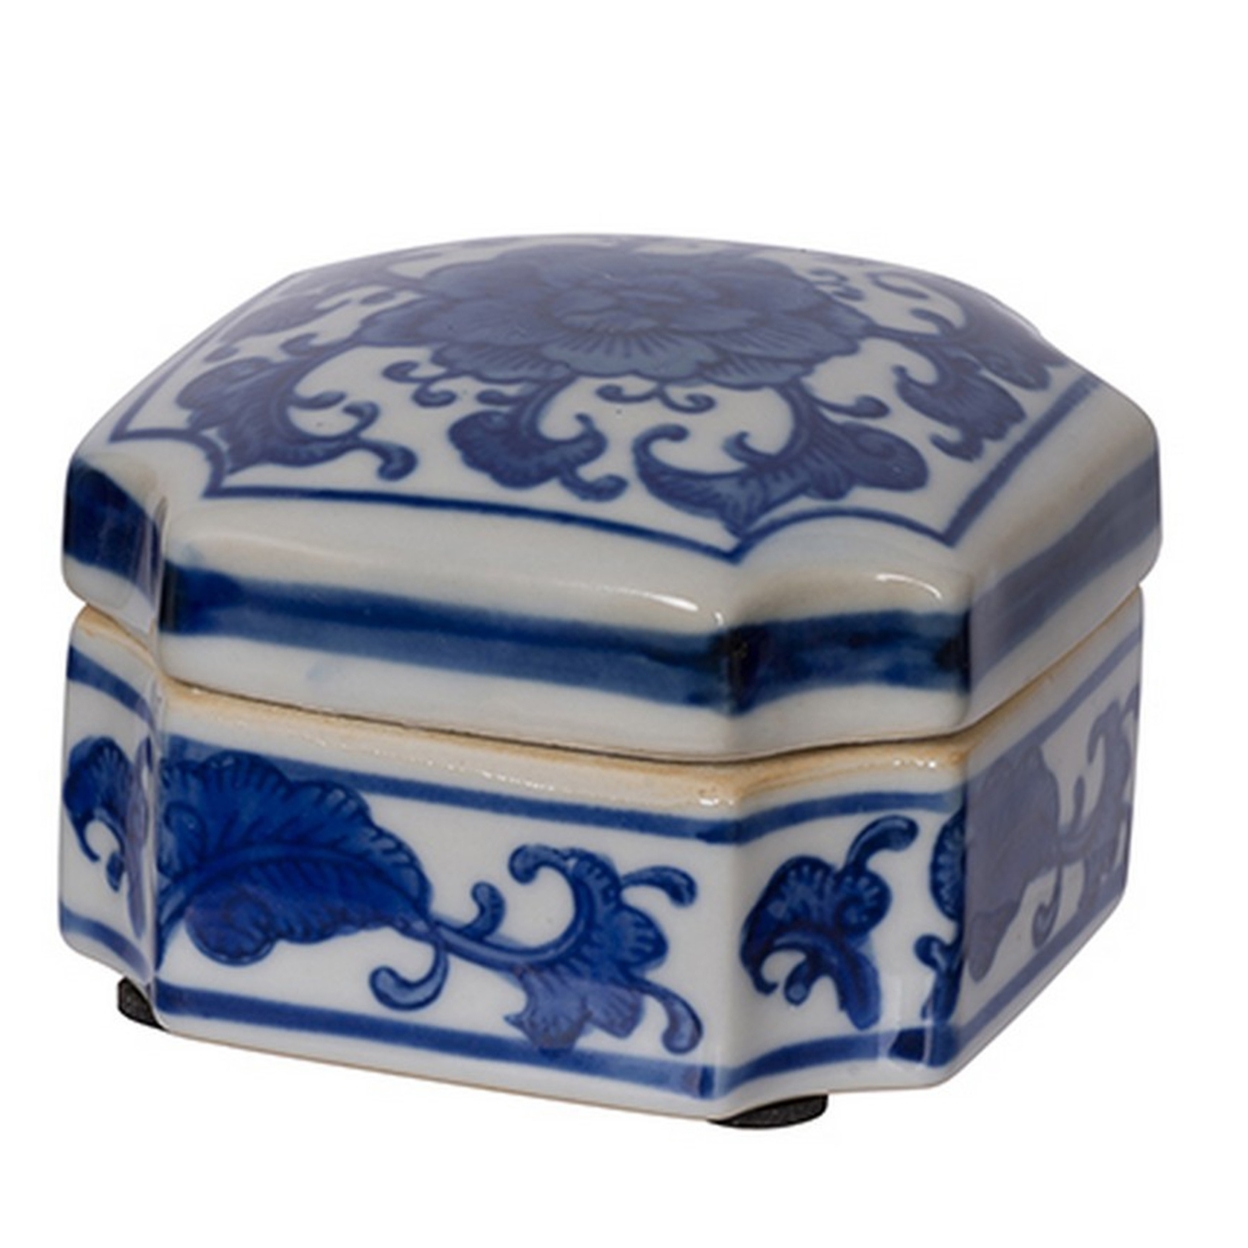 Set Of 3 Decorative Boxes, White And Blue Porcelain Pottery, Floral Designs- Saltoro Sherpi